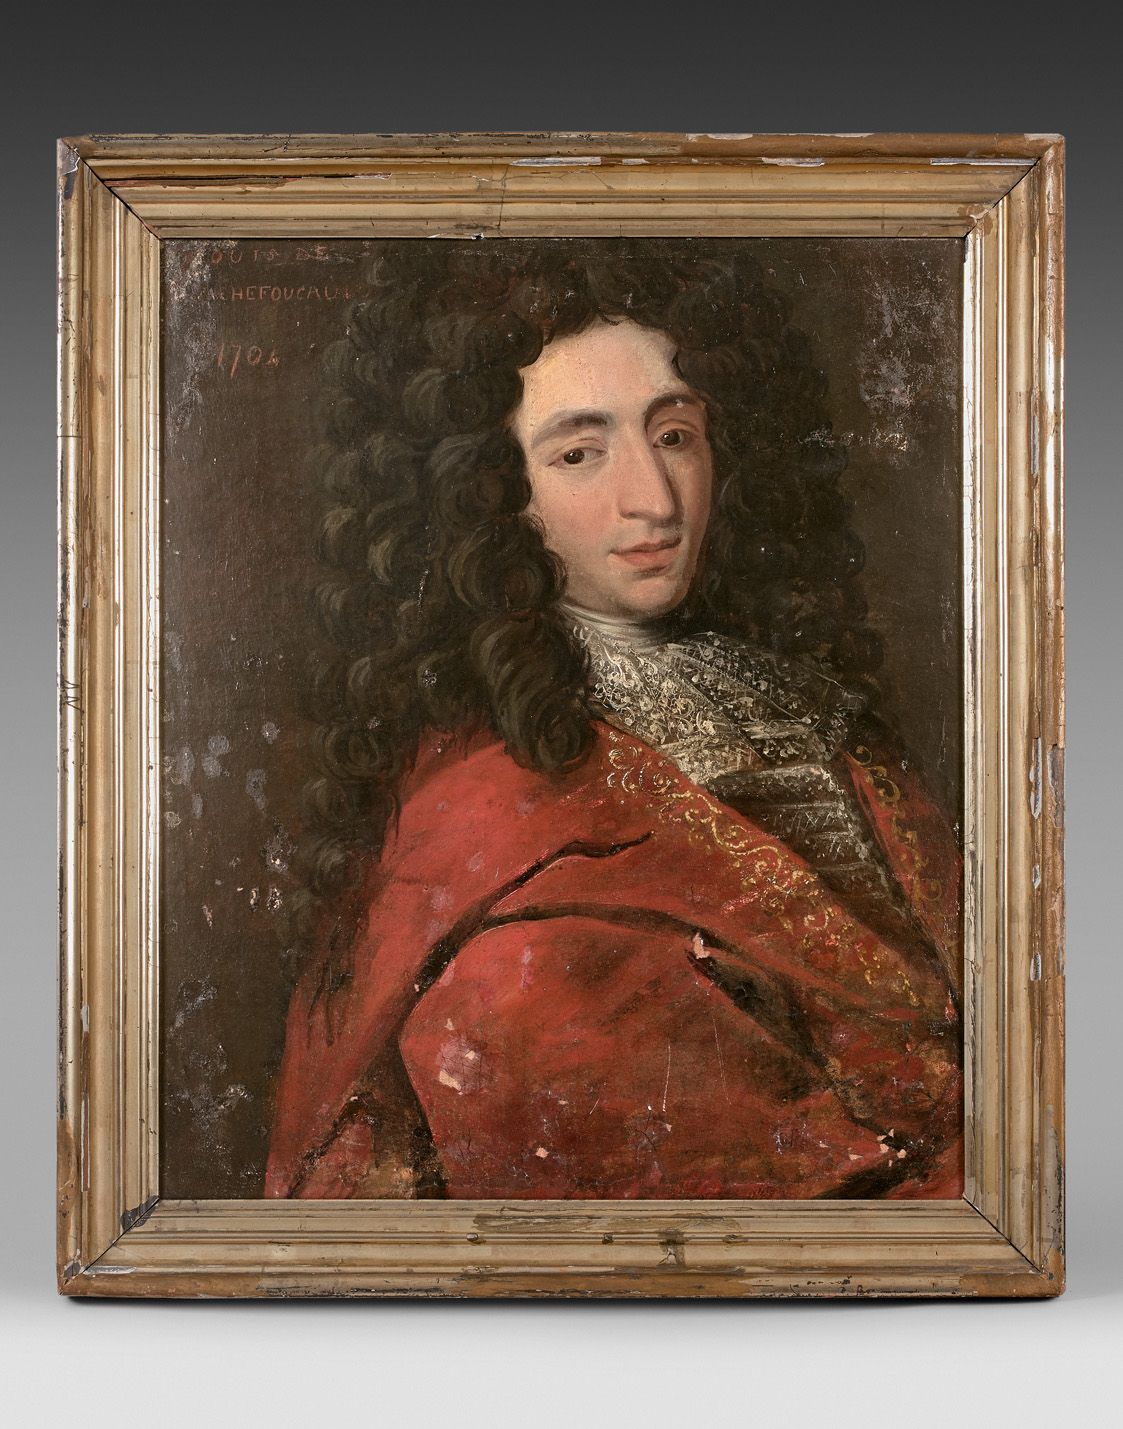 Null French school of the early 18th century

Presumed portrait of Louis de [La &hellip;